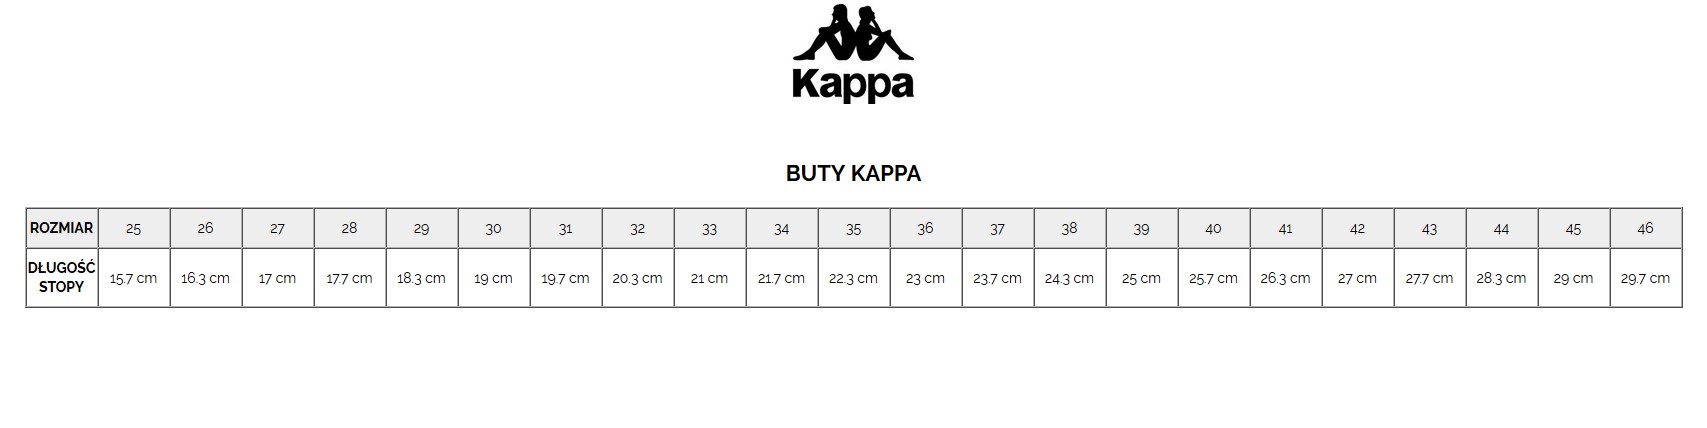 kappa-buty-unisex.jpg (66 KB)